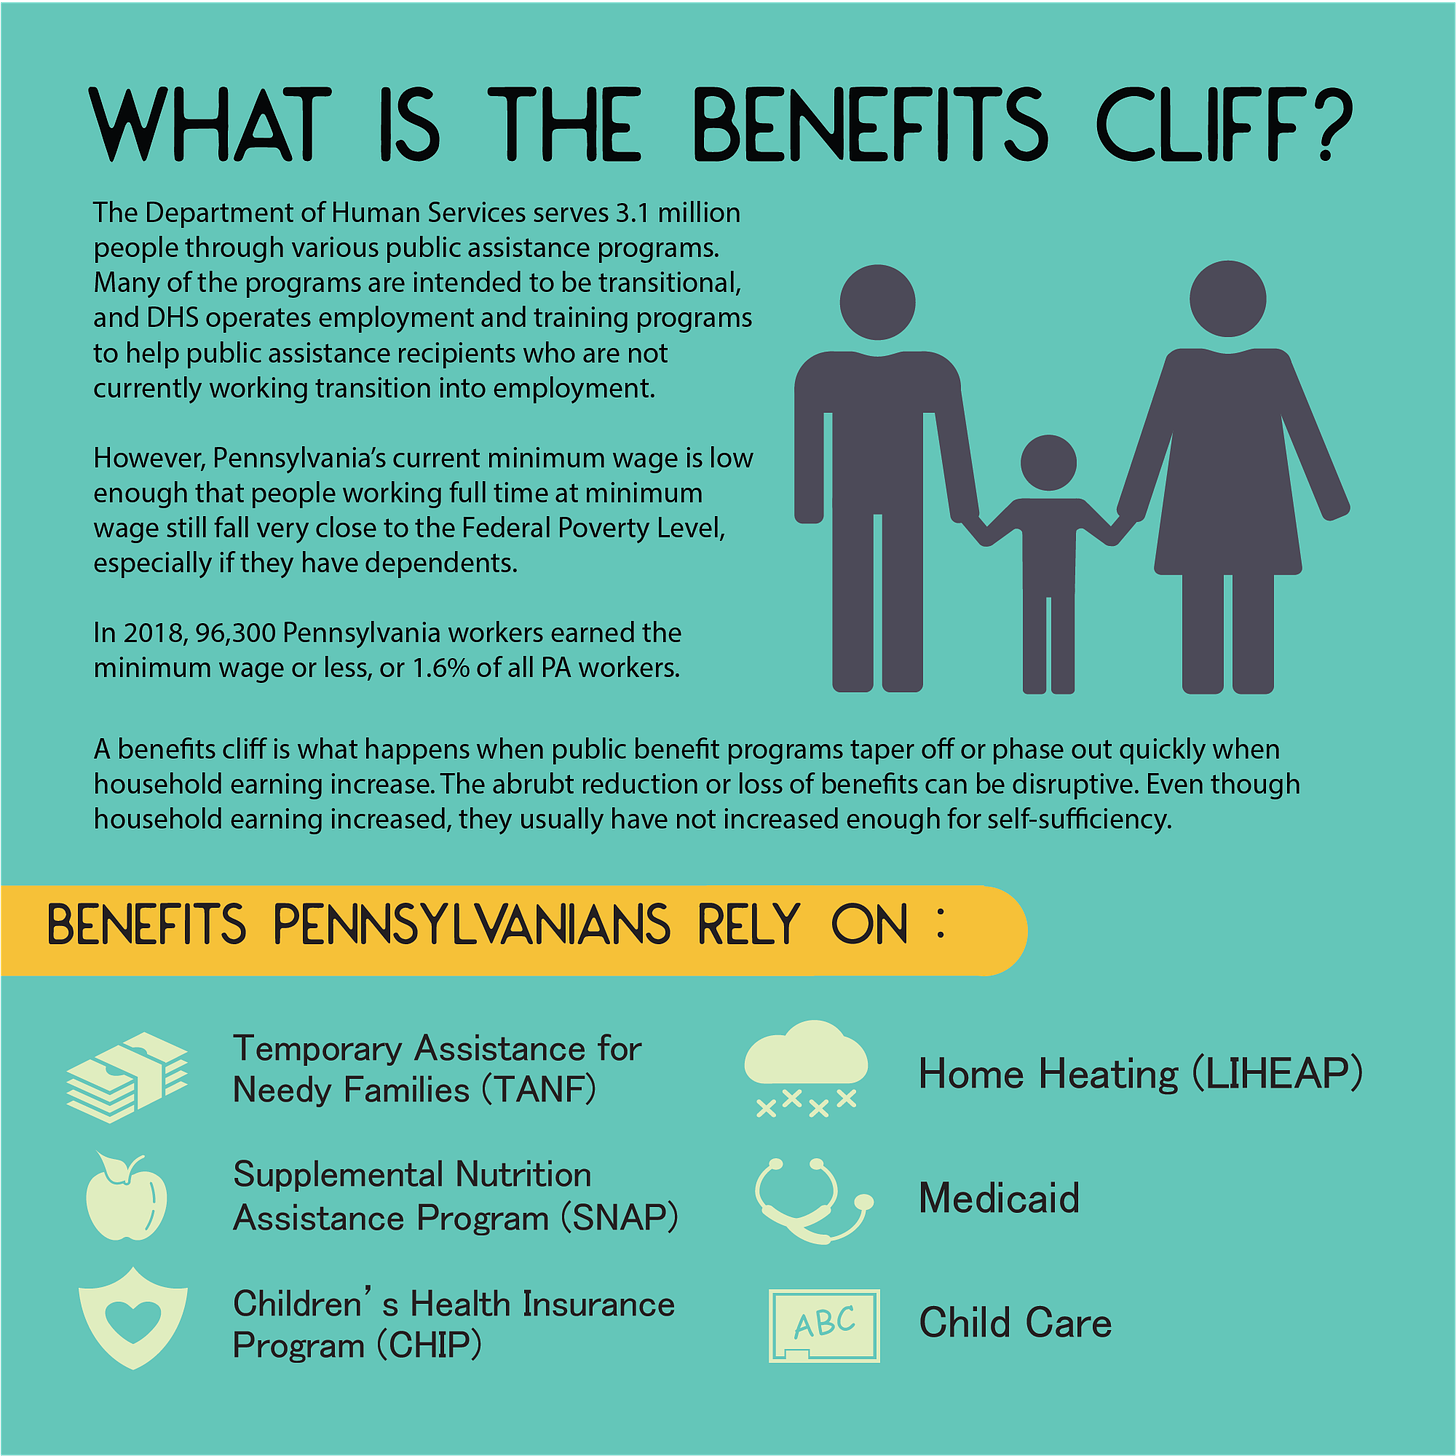 Benefits Cliff